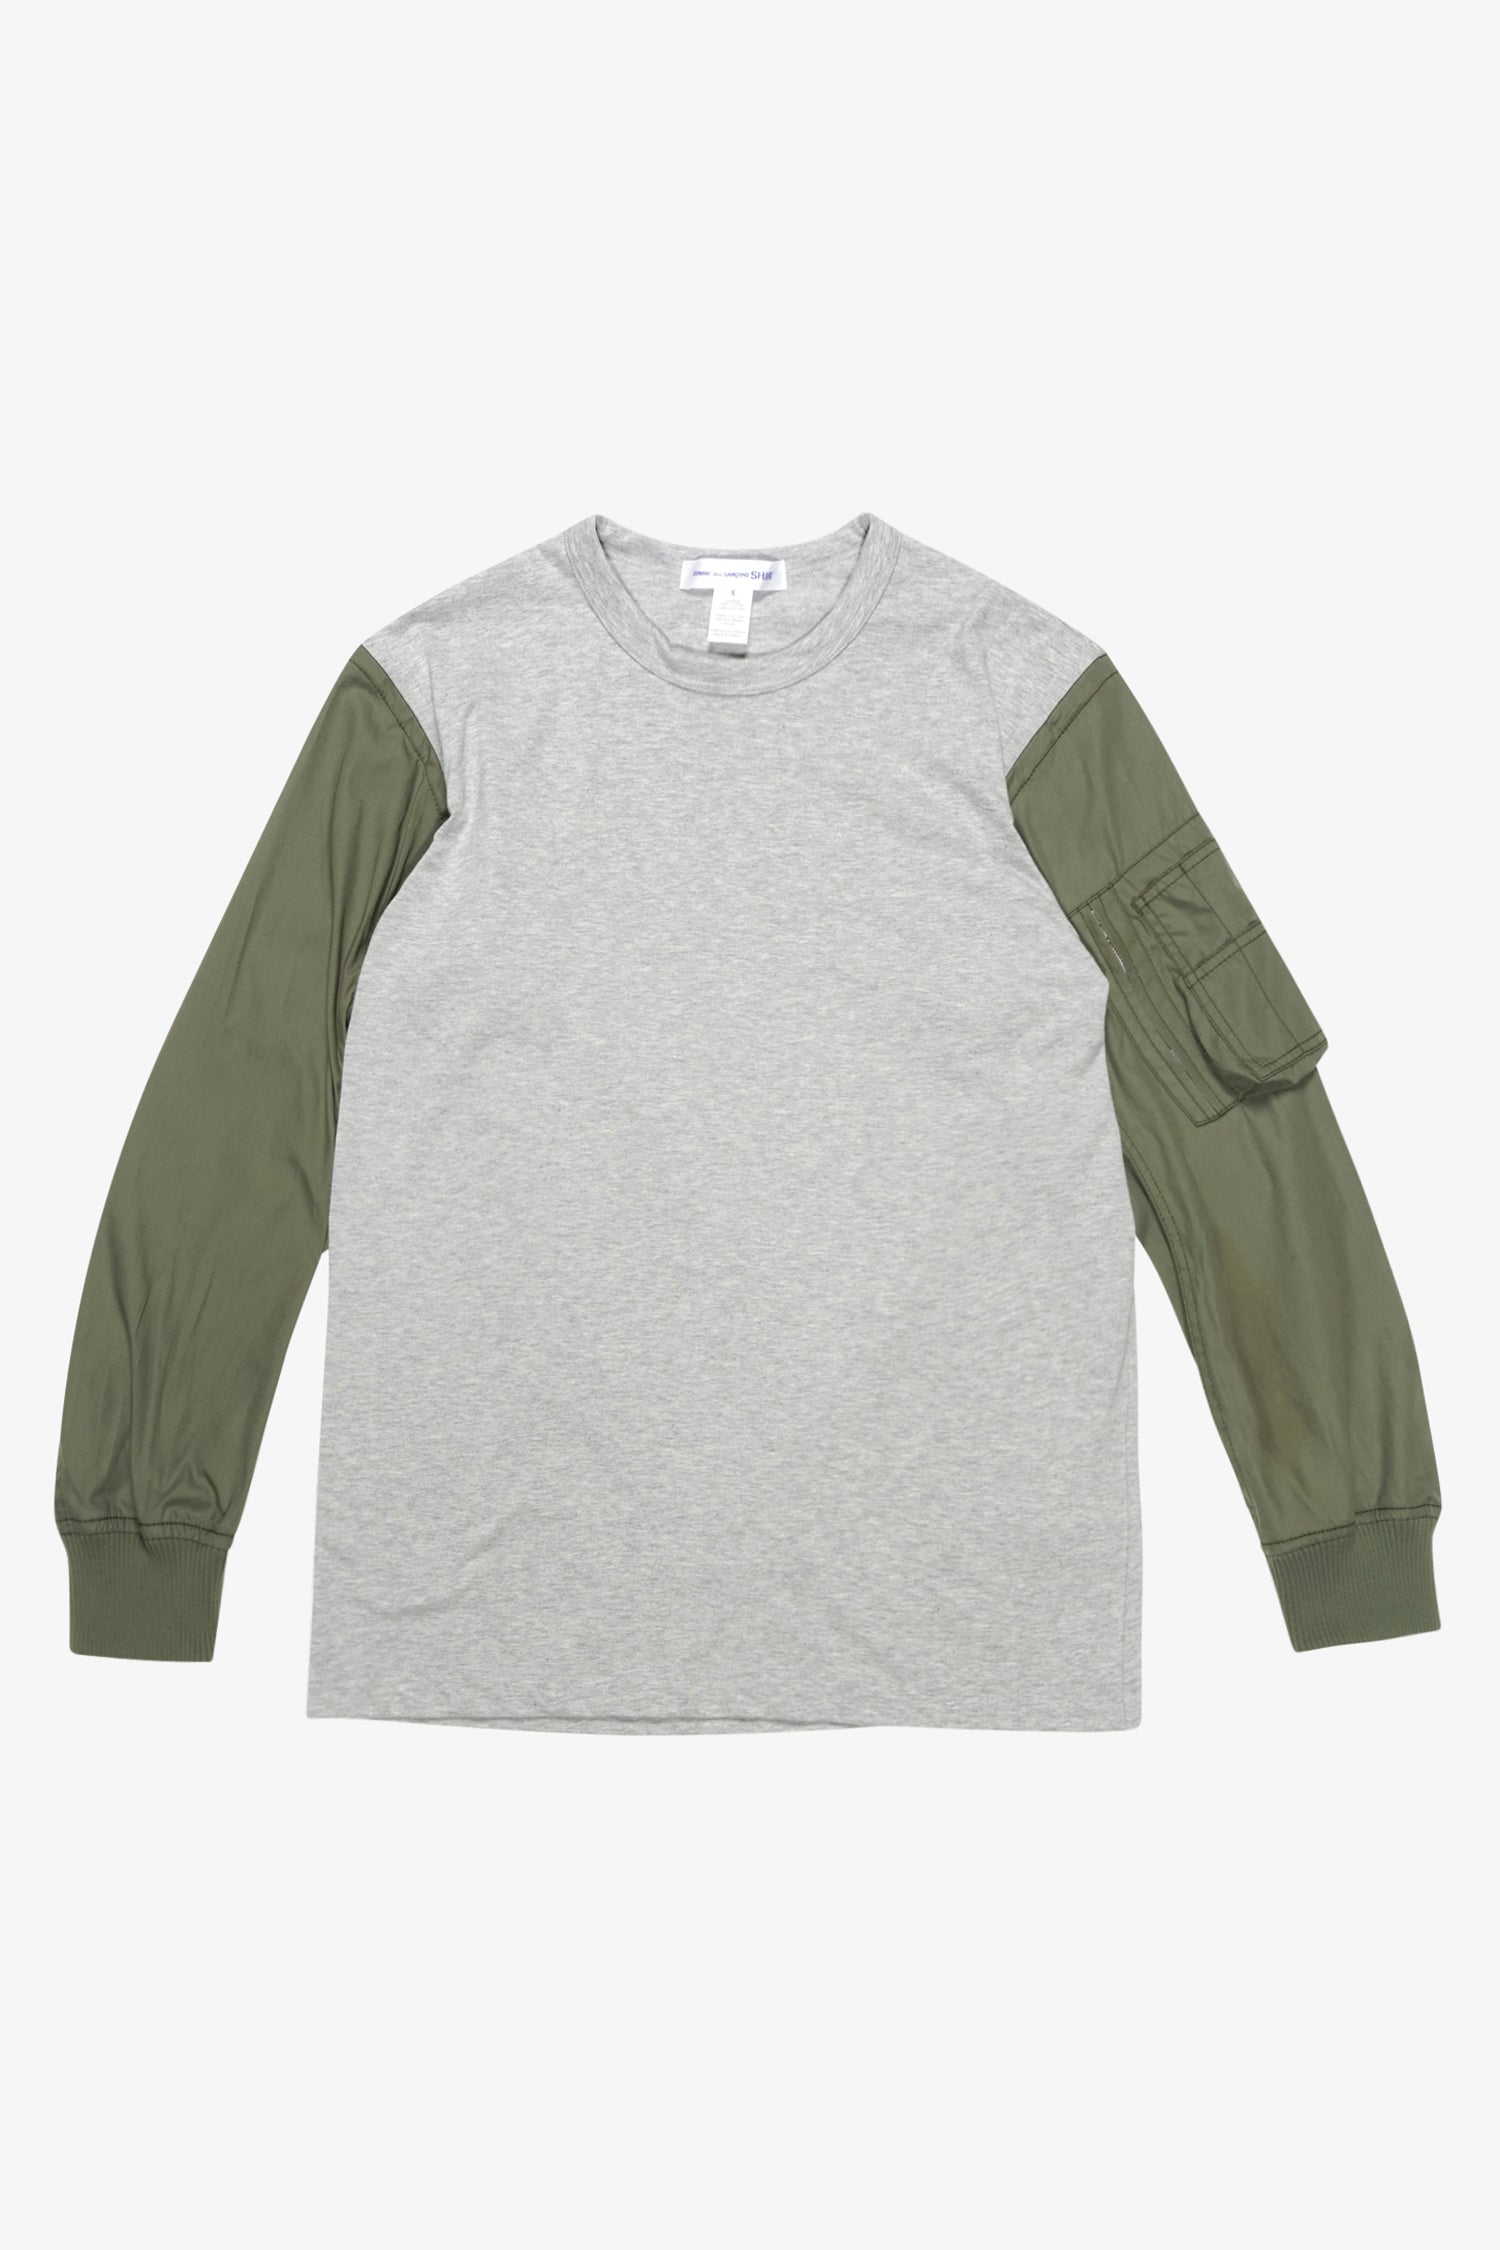 Selectshop FRAME - COMME DES GARÇONS SHIRT Bomber Sleeves Sweatshirt Sweatshirt Dubai